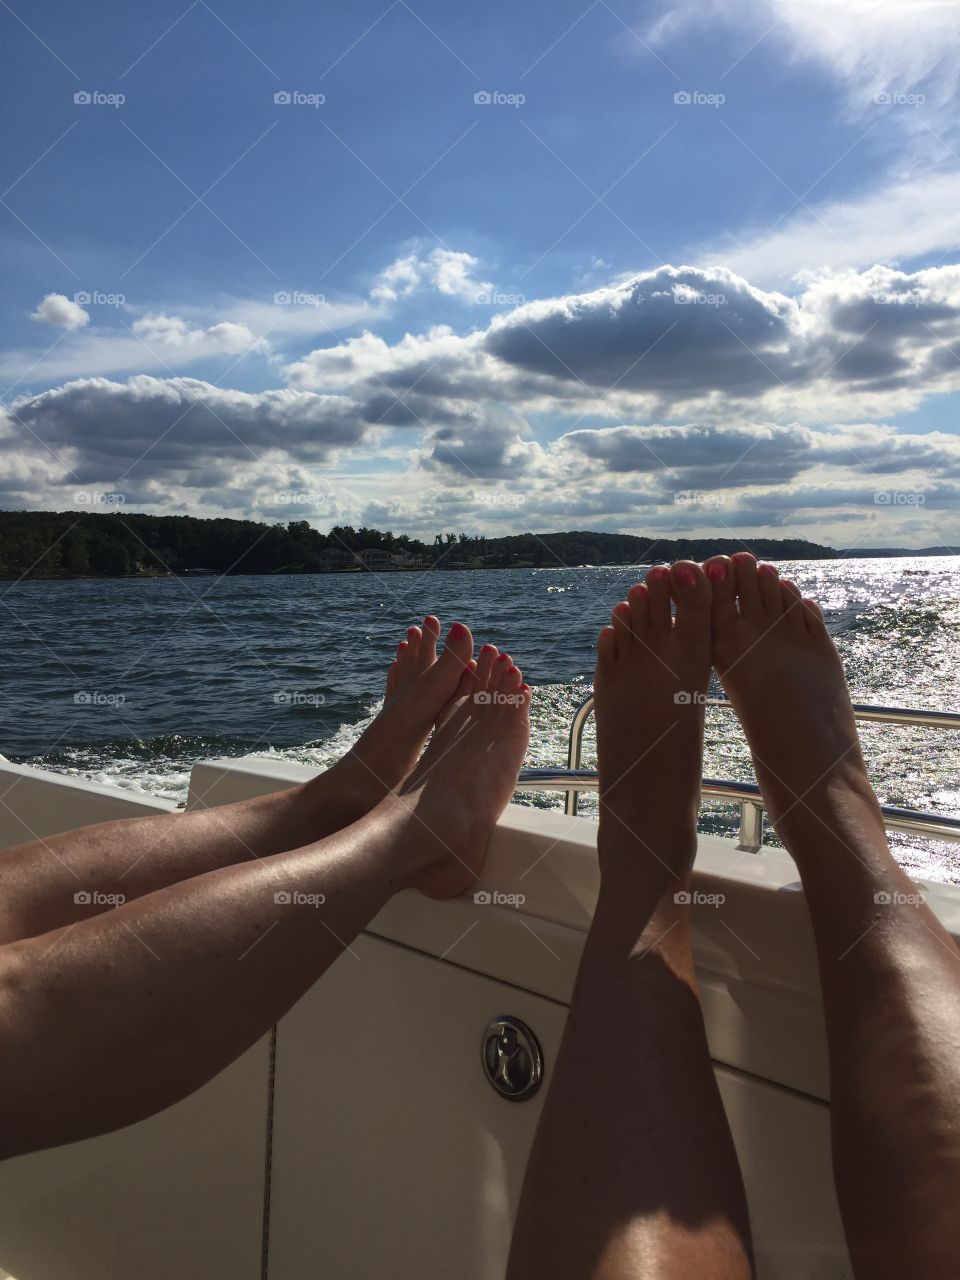 Happy feet!